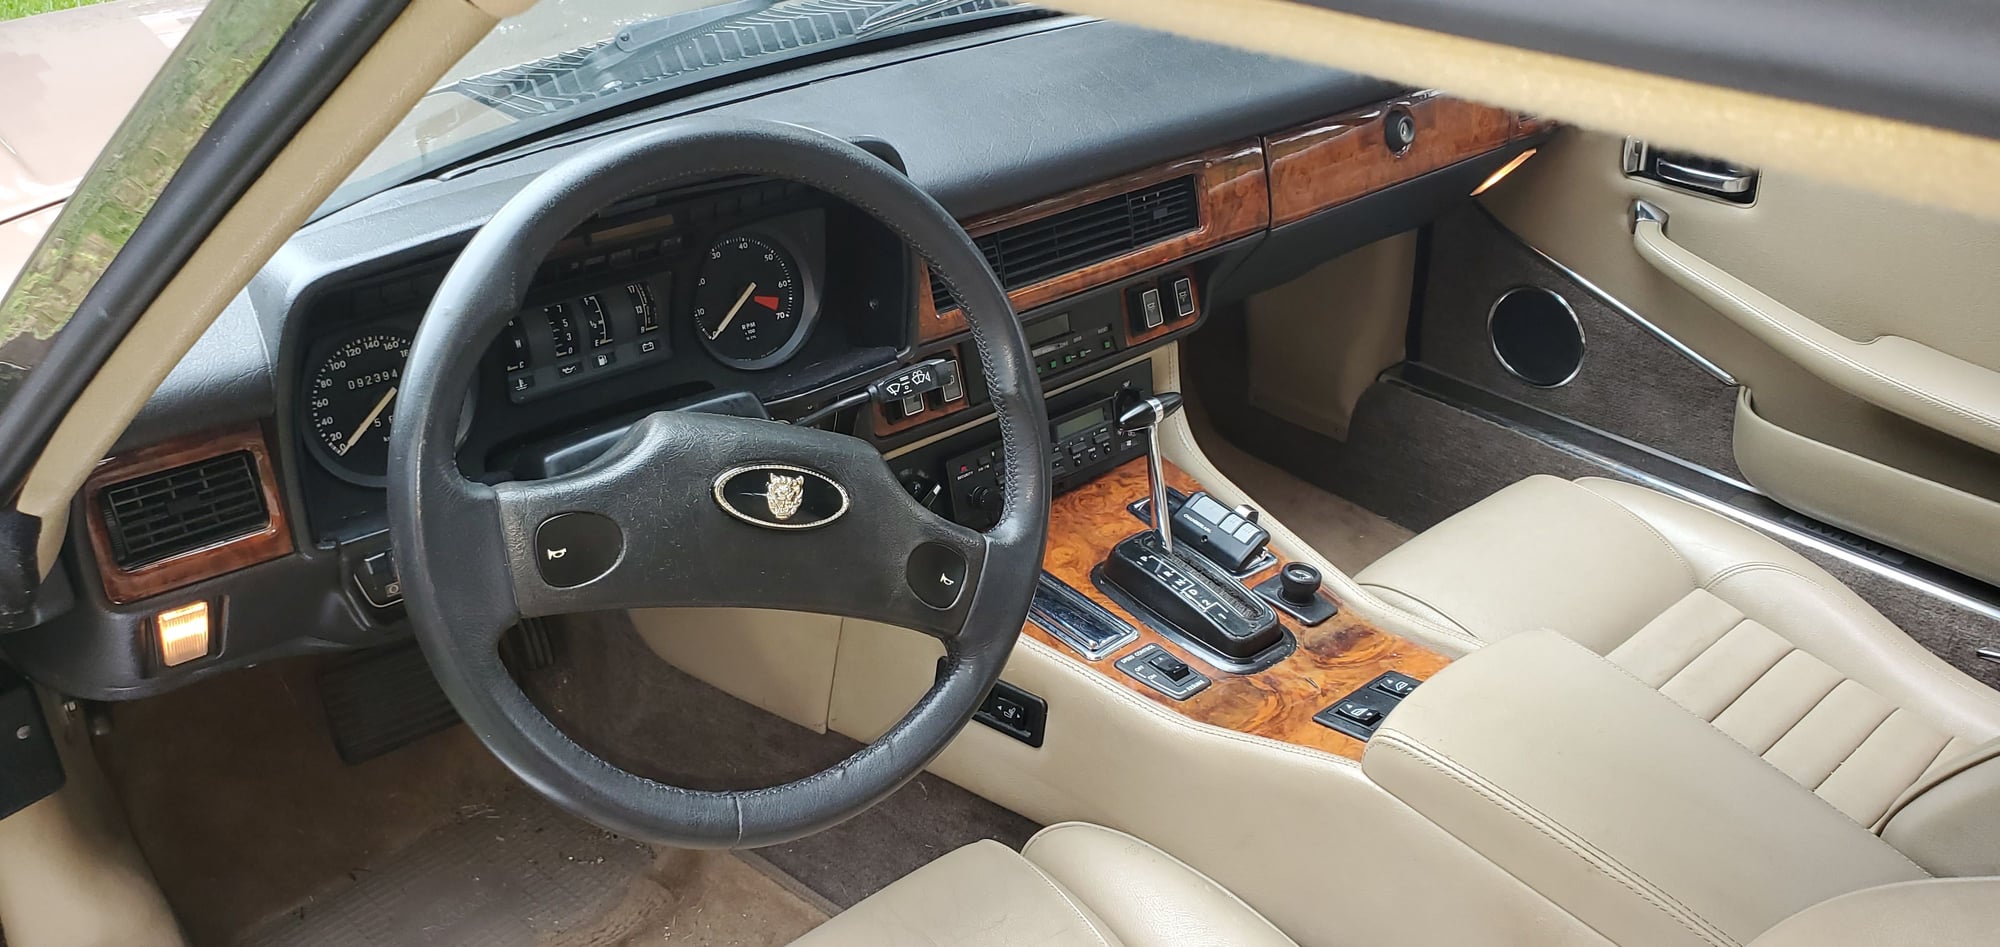 1988 Jaguar XJS - 1988 xjs canadian spec 60k miles - Used - VIN SAJNL5845JC149538 - 60,000 Miles - 12 cyl - 2WD - Automatic - Coupe - Gold - Jacksonville, FL 32223, United States